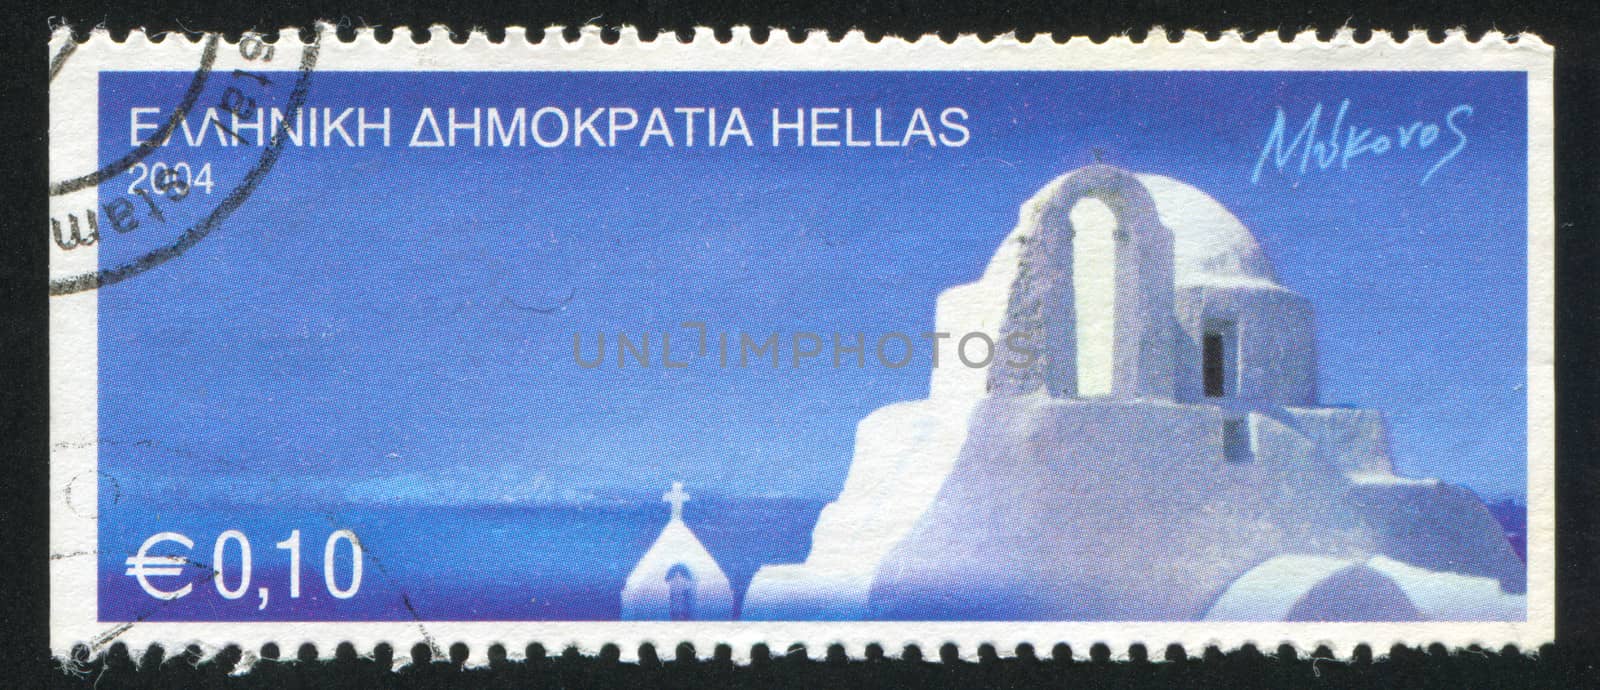 GREECE - CIRCA 2004: stamp printed by Greece, shows Mykonos, circa 2004